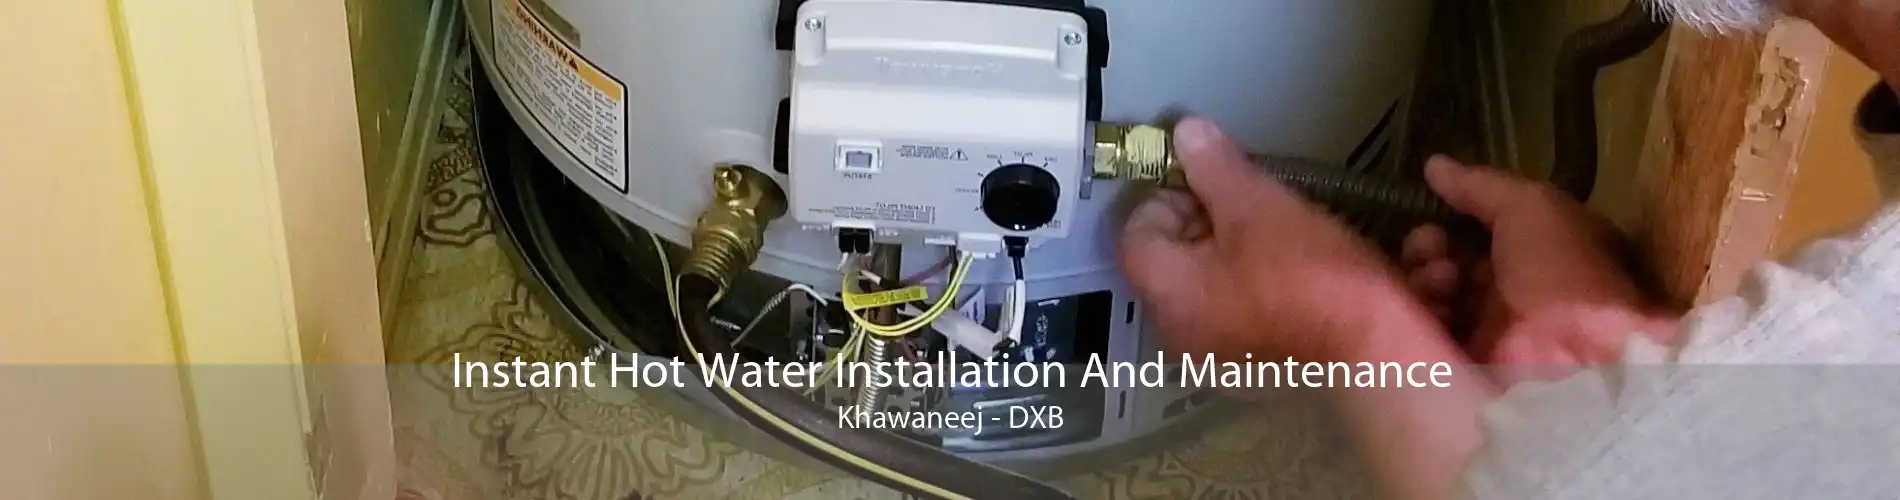 Instant Hot Water Installation And Maintenance Khawaneej - DXB